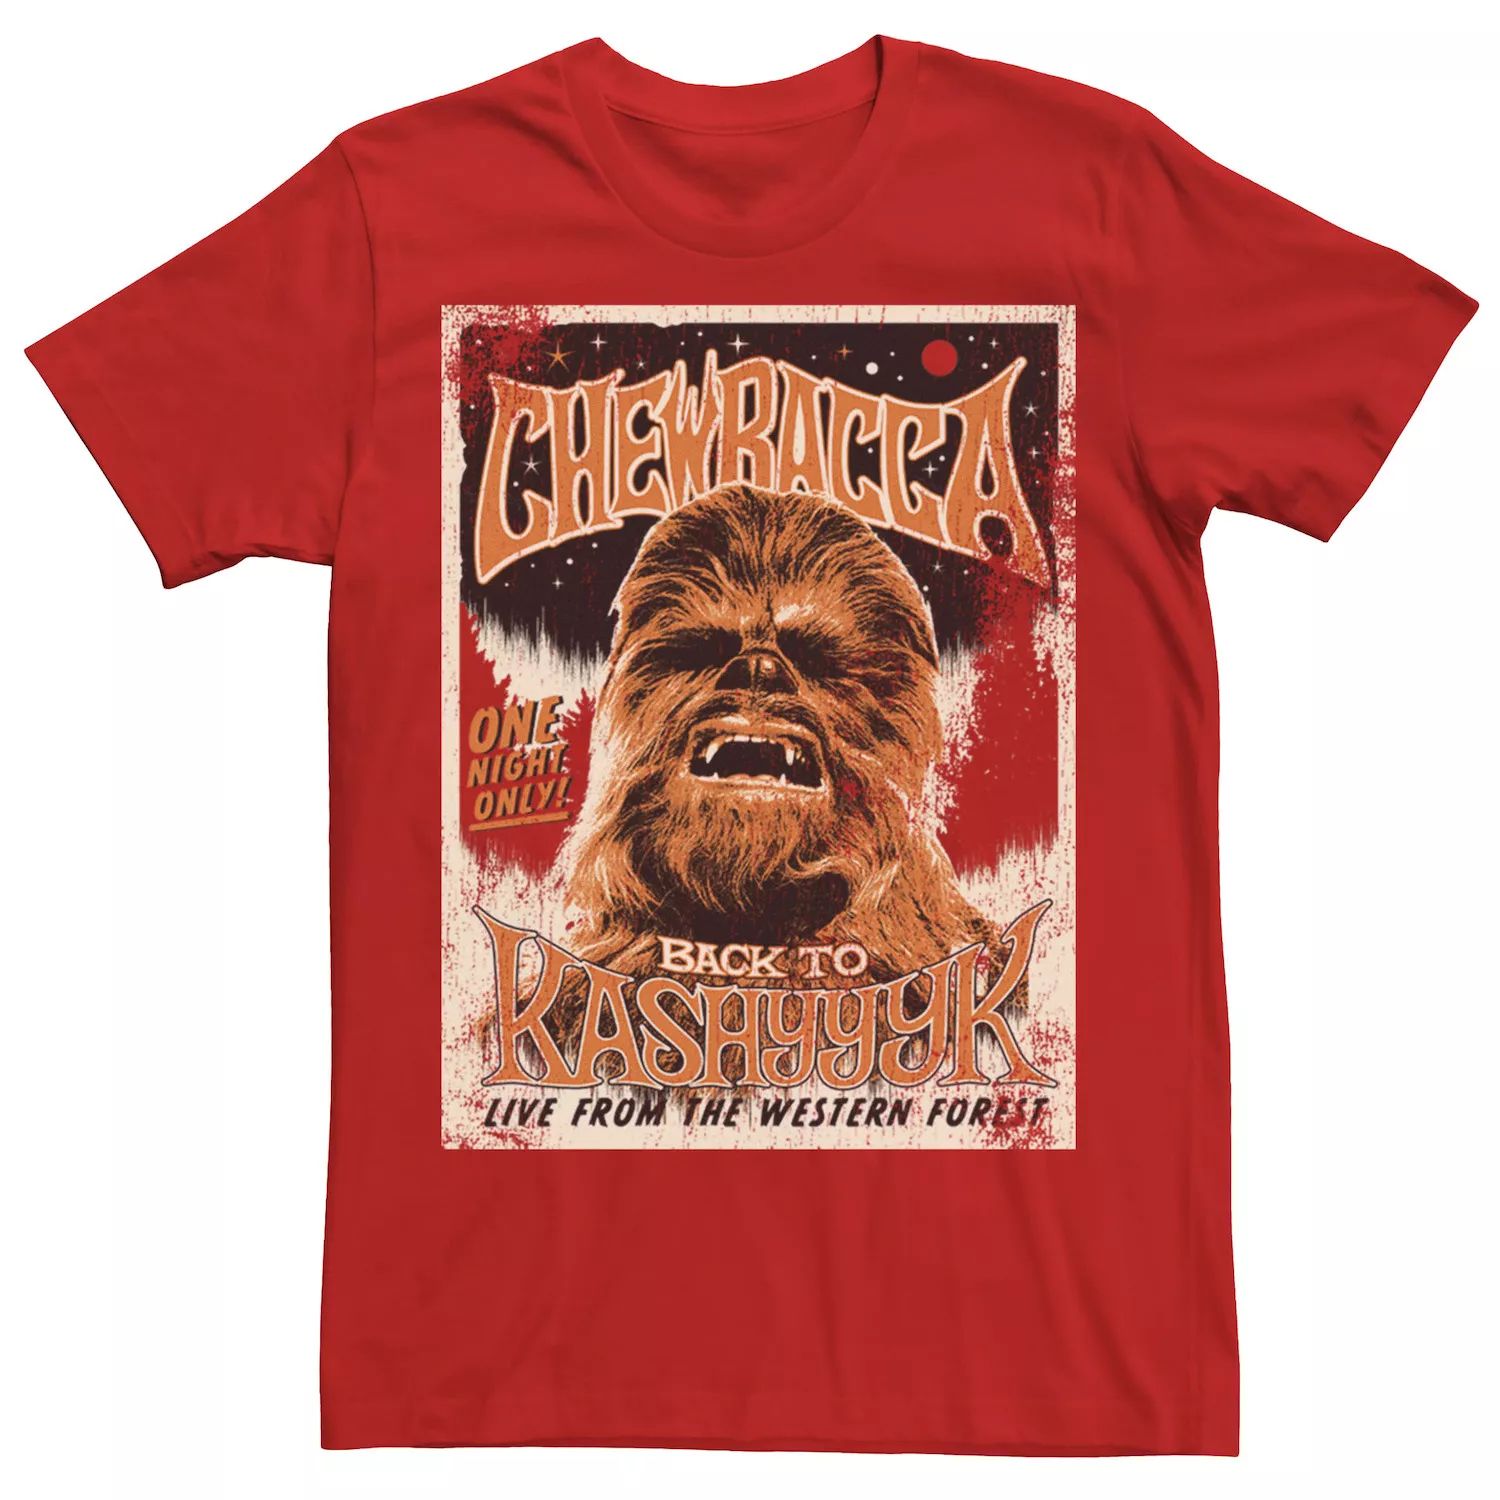 Мужская винтажная футболка с плакатом к концерту «Звездные войны Чубакка», красная Star Wars, красный